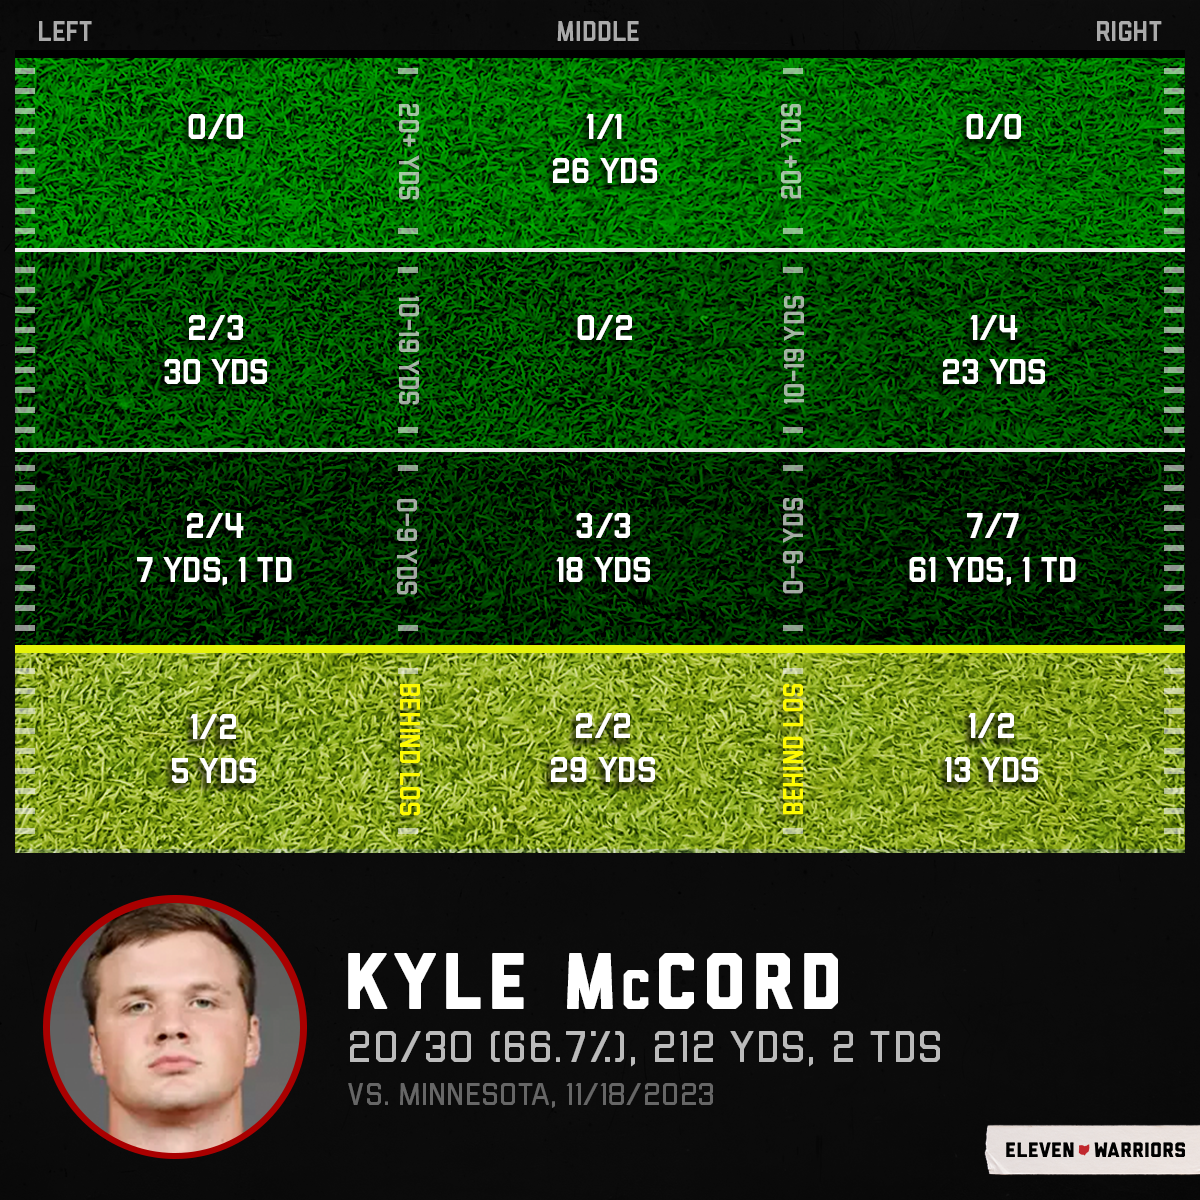 Kyle McCord's passing chart vs. Minnesota